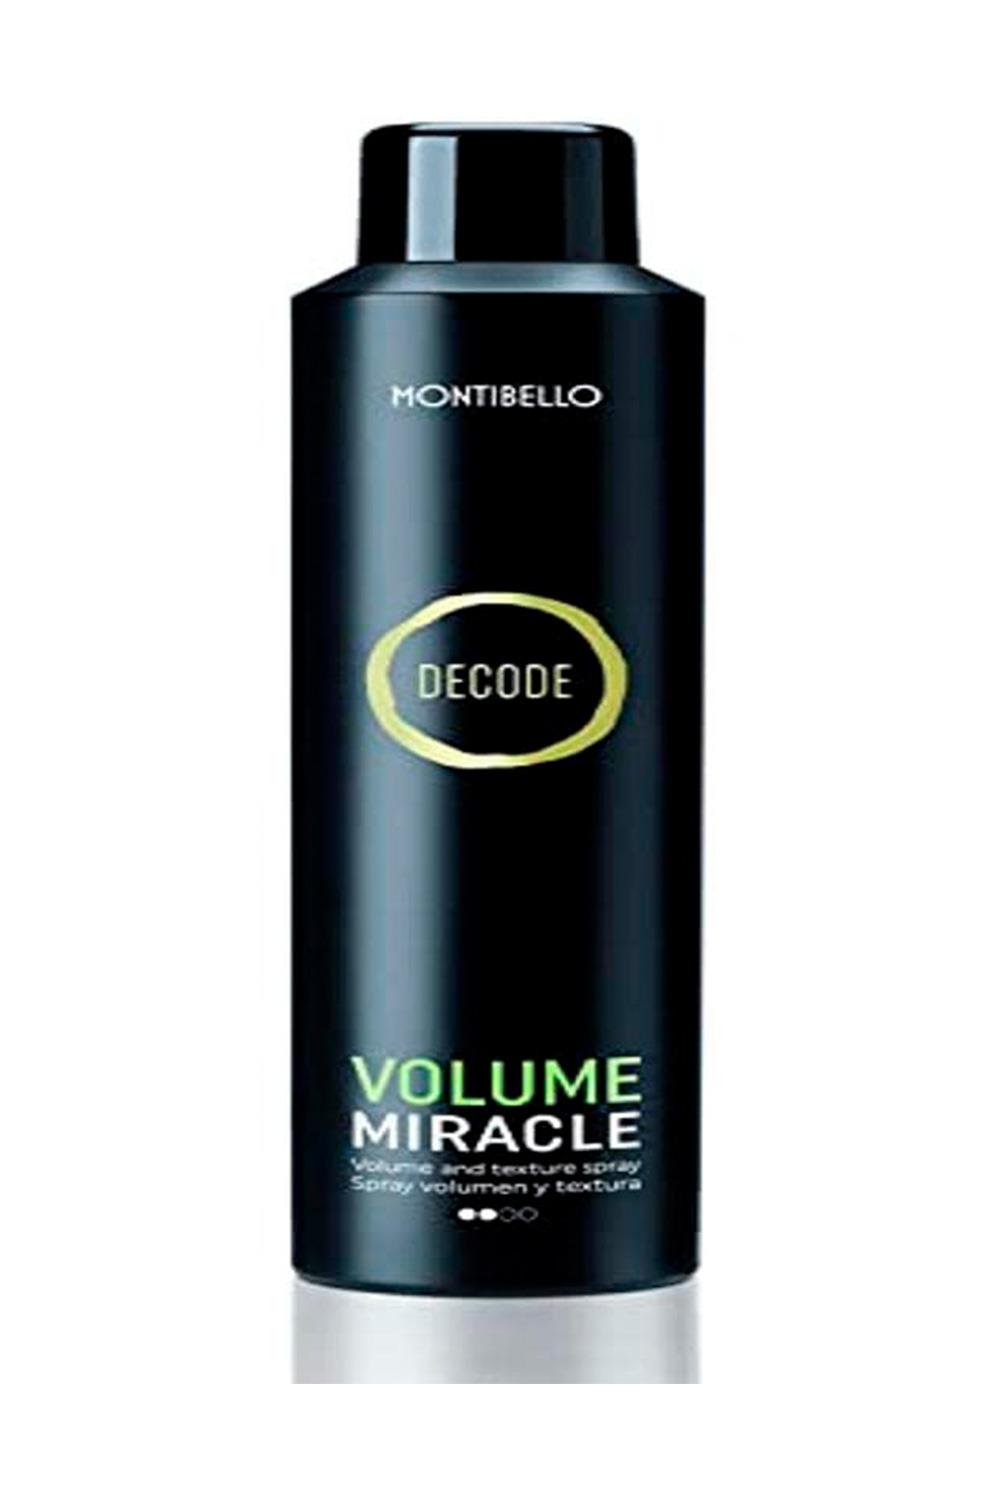 Decode Volume Miracle, Montibello